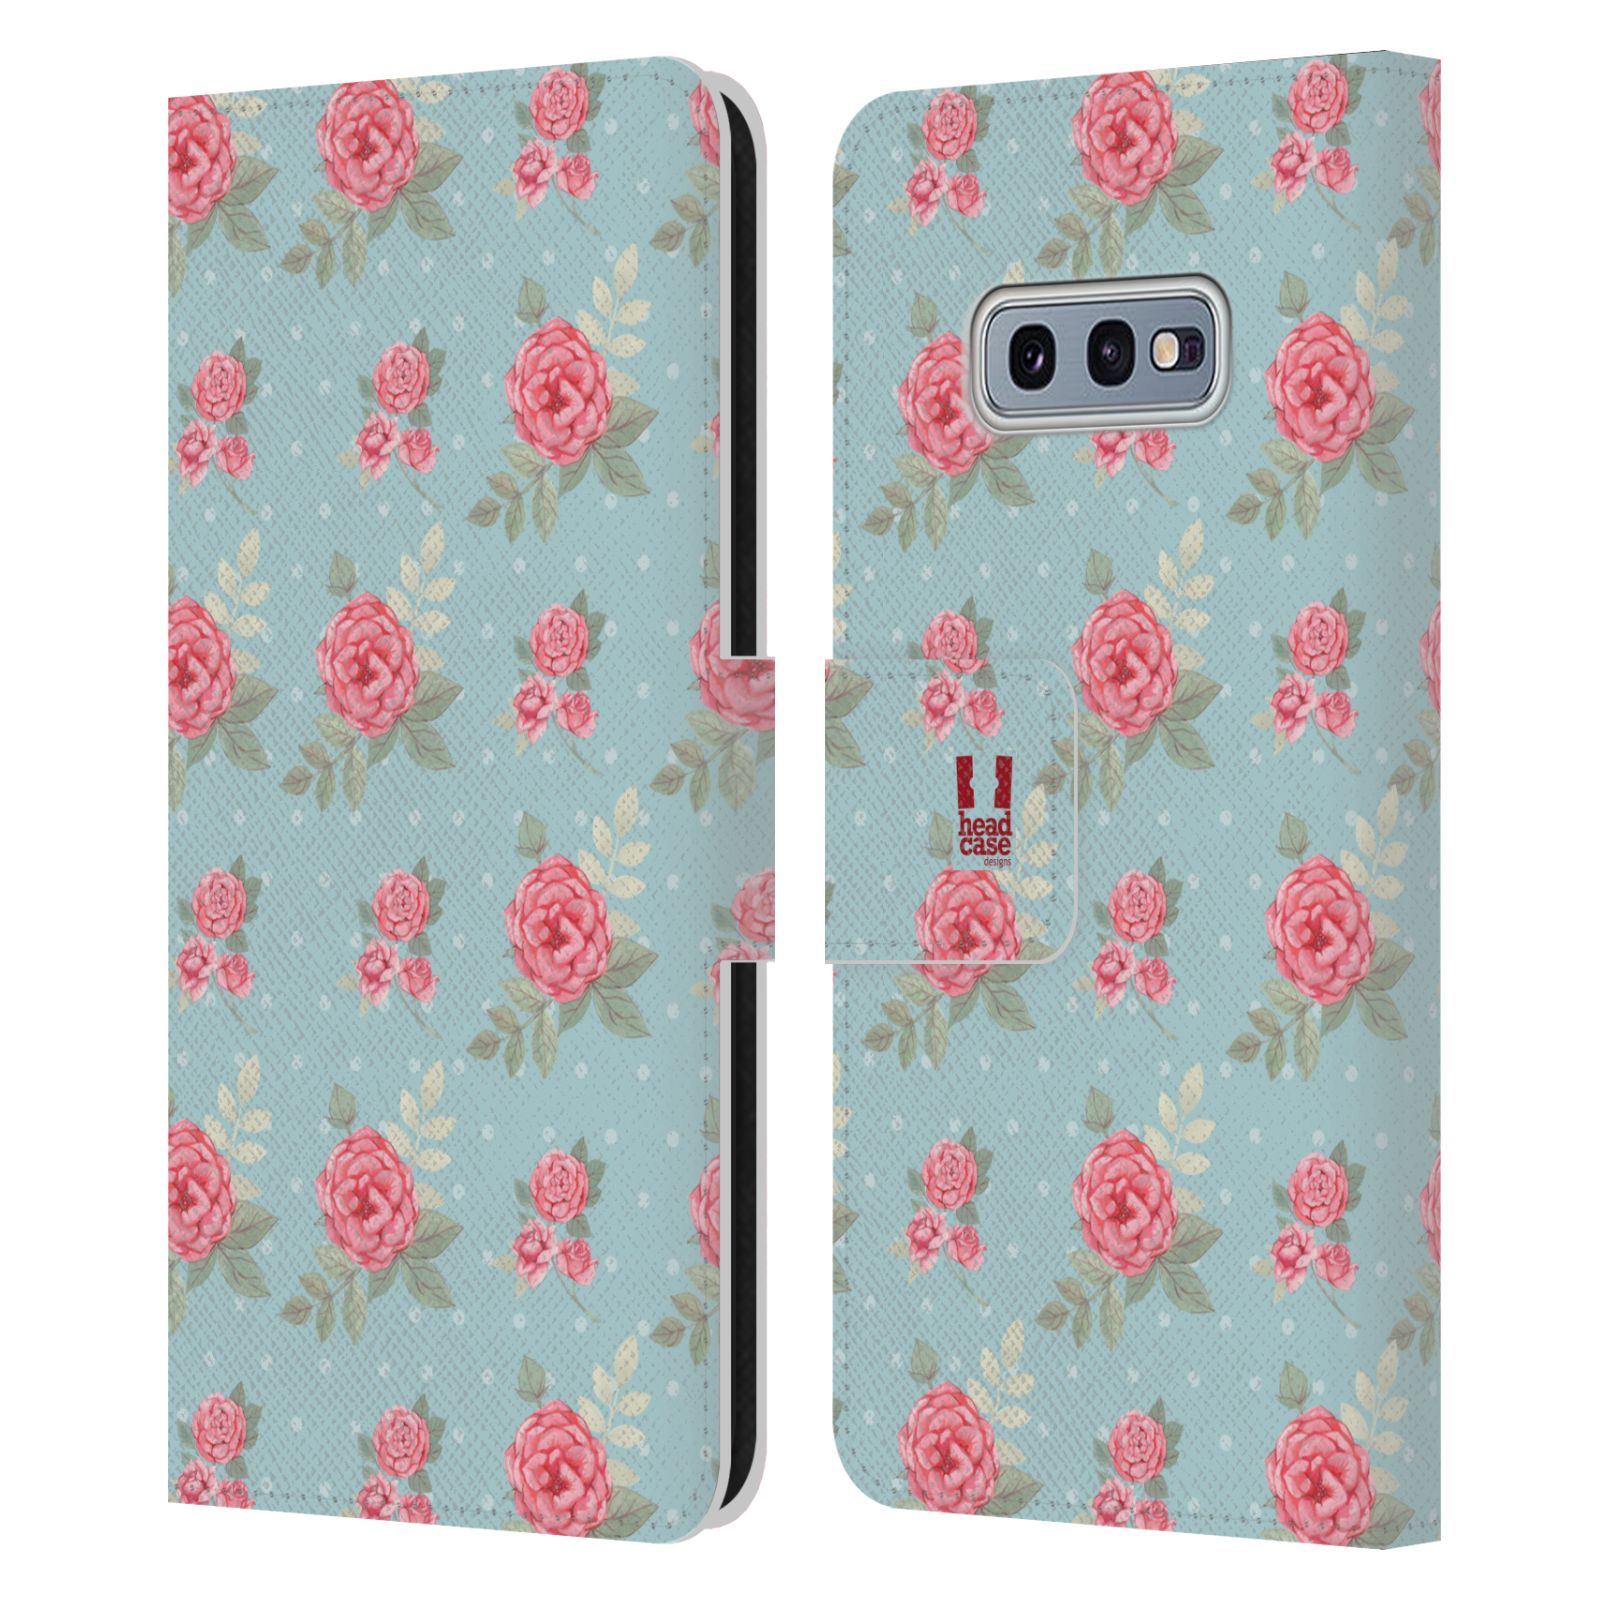 Pouzdro HEAD CASE na mobil Samsung Galaxy S10e romantické květy anglické růže modrá a růžová